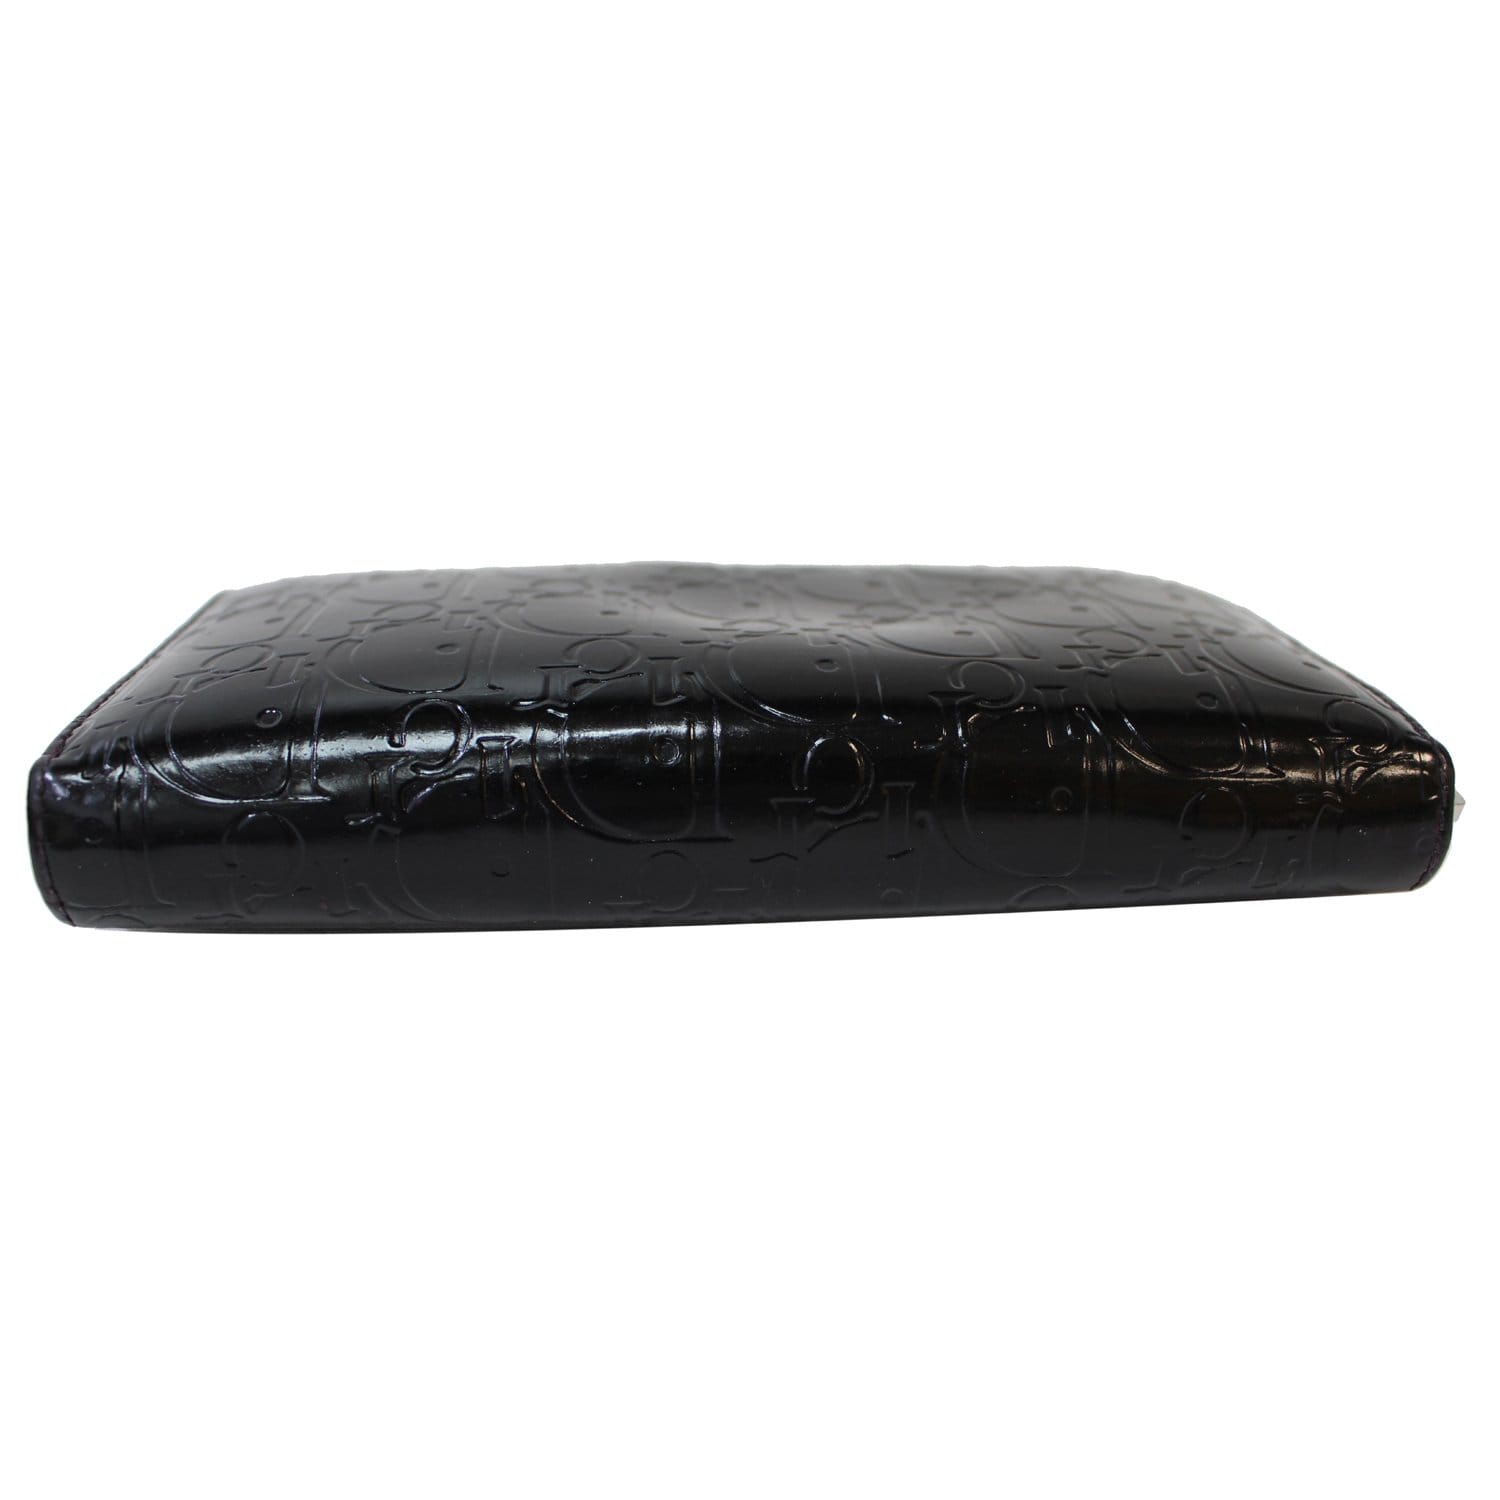 Christian Dior Logo Stripe Zip Around Wallet Leather Long Black 23217251